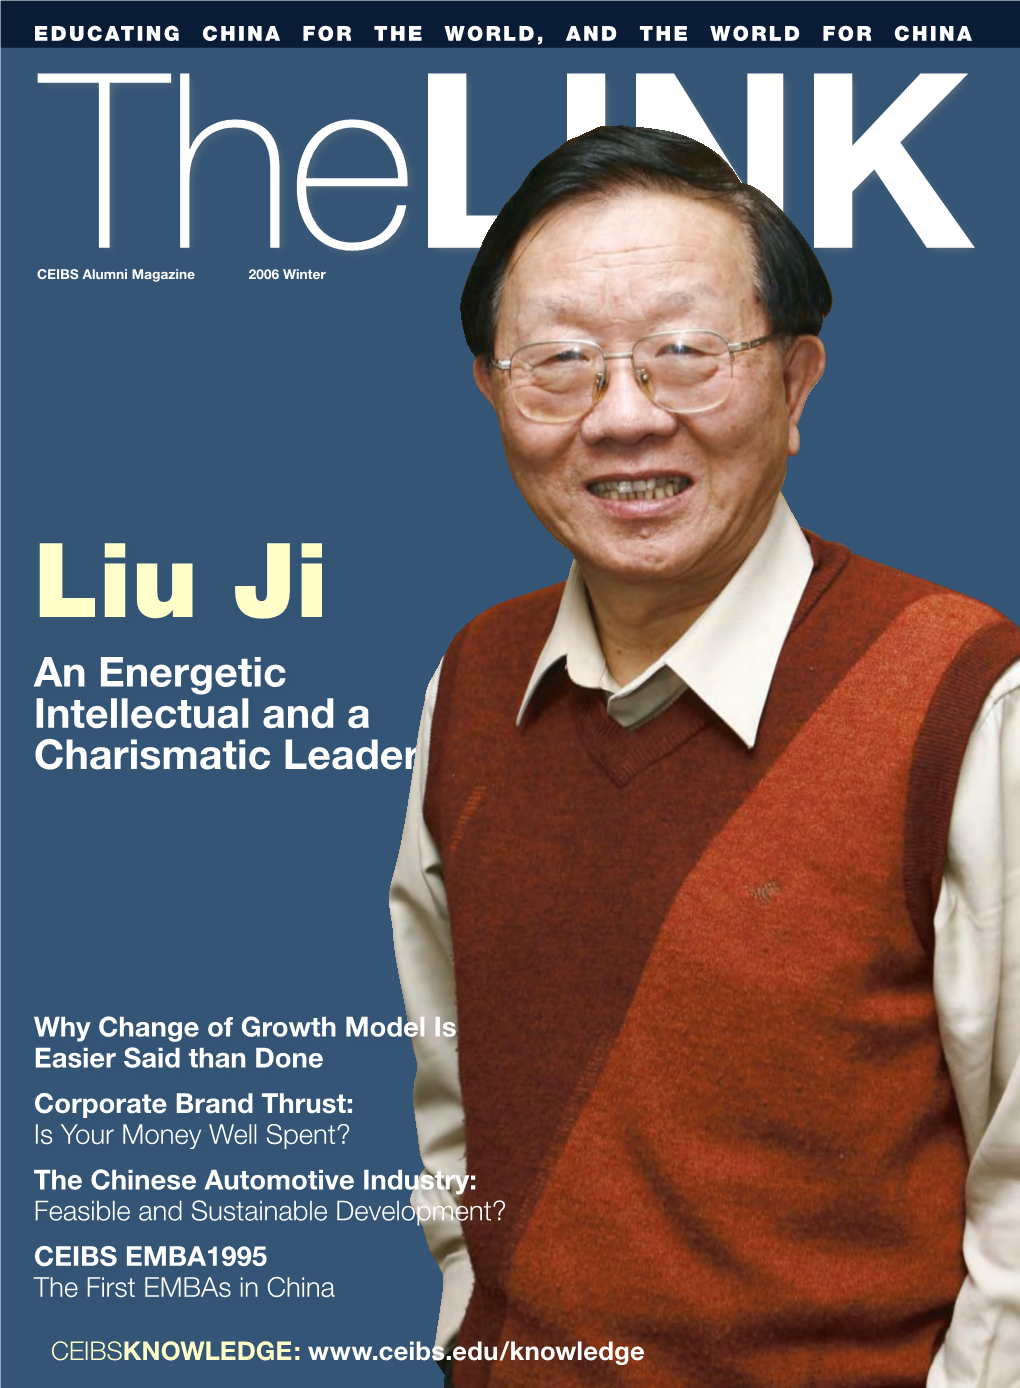 Liu Ji 2006 an Energetic Winter Intellectual and a Charismatic Leader